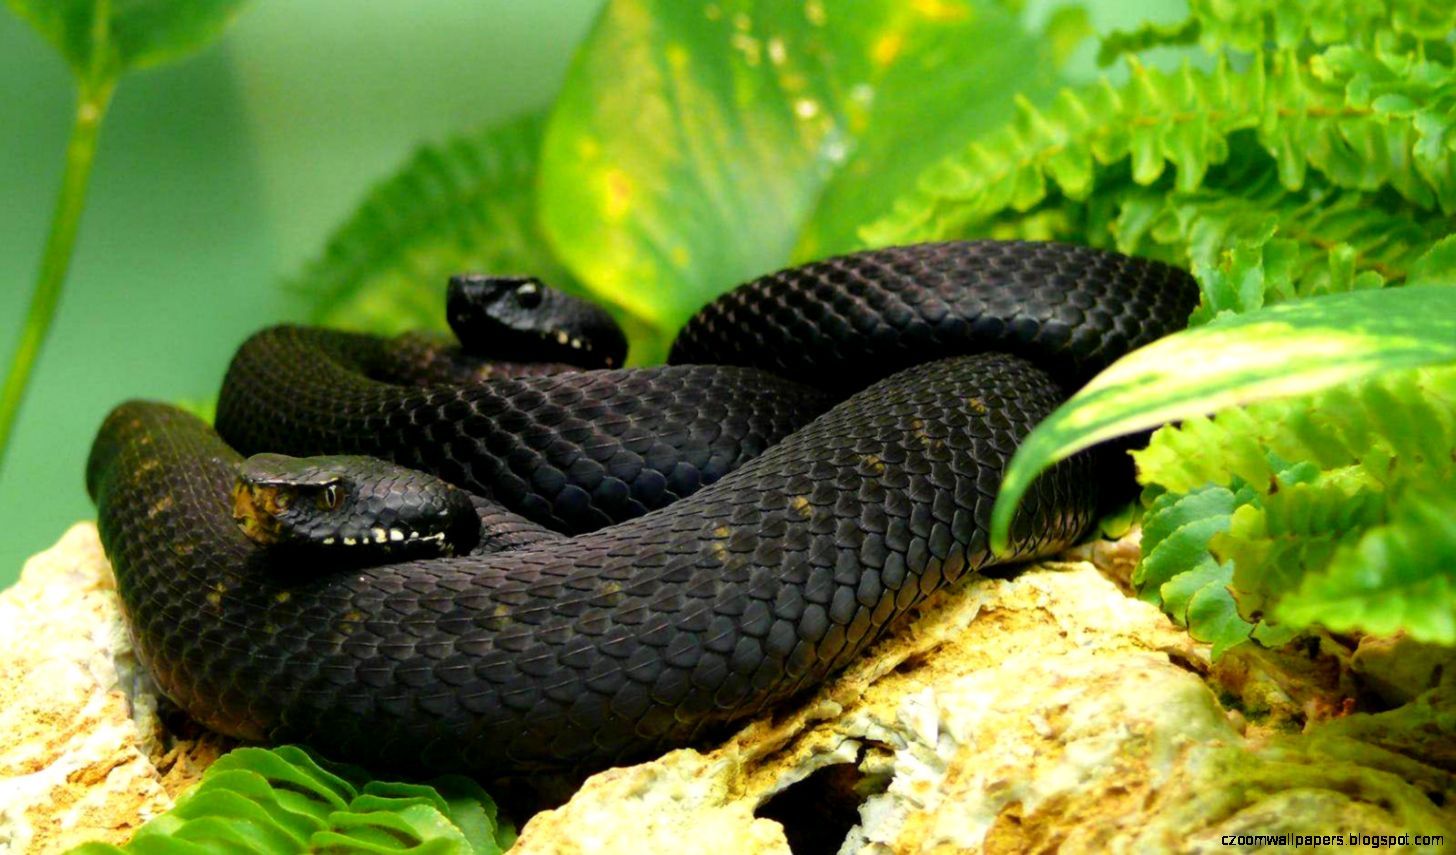 Black Mamba Snake Background Image HD Wallpaper Of Snakes. Zoom